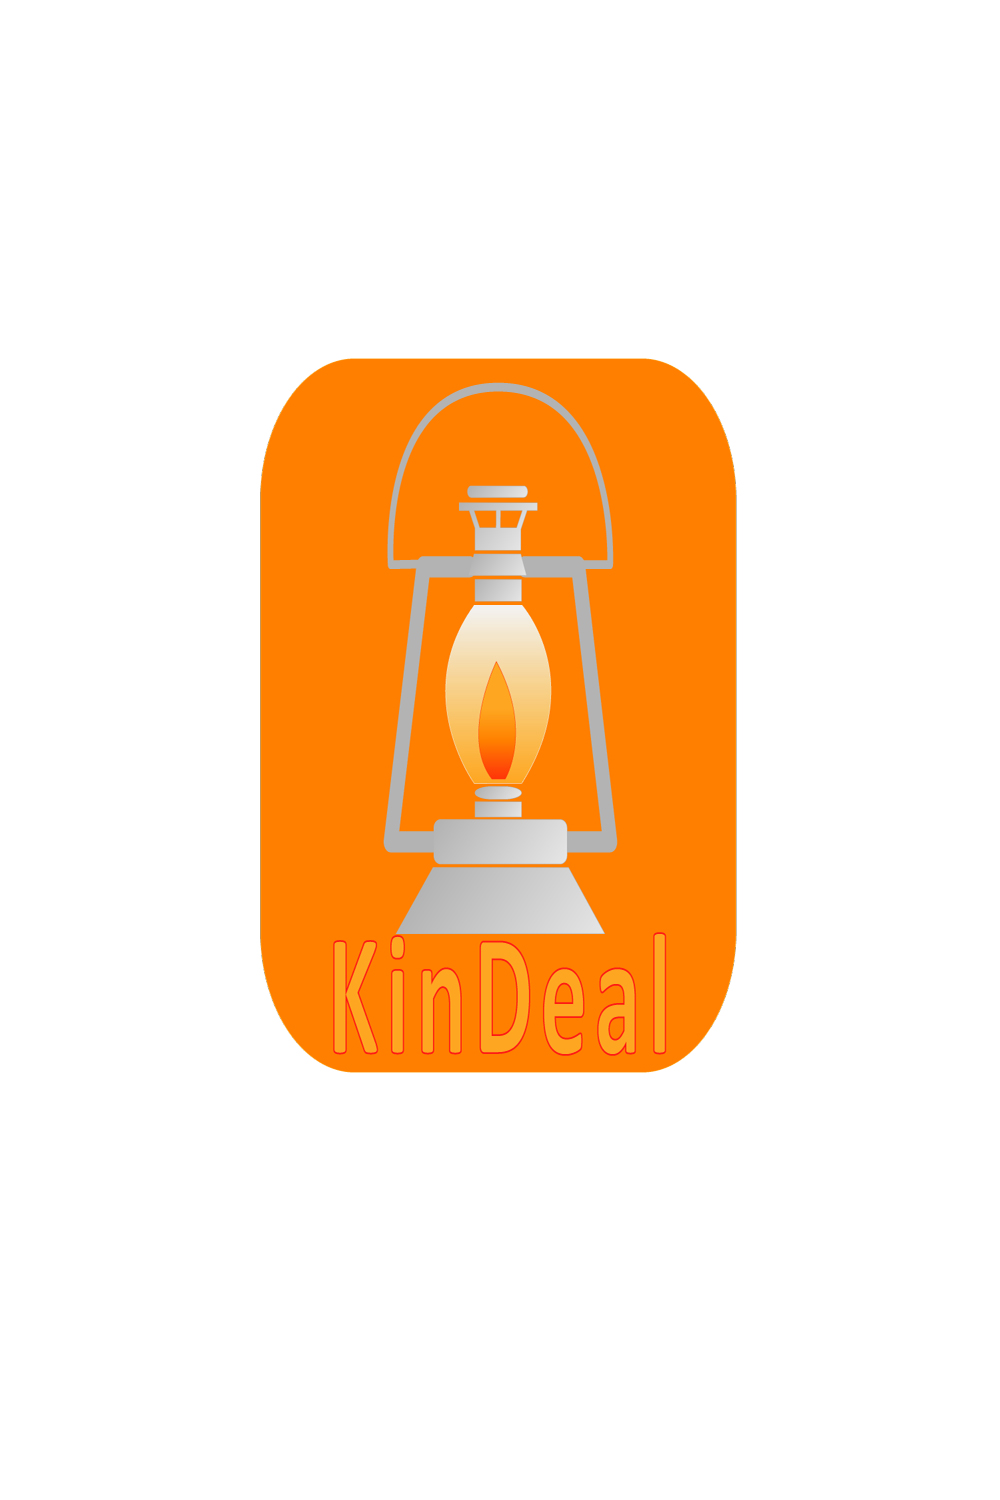 Kindeal - TShirt Print Design pinterest preview image.